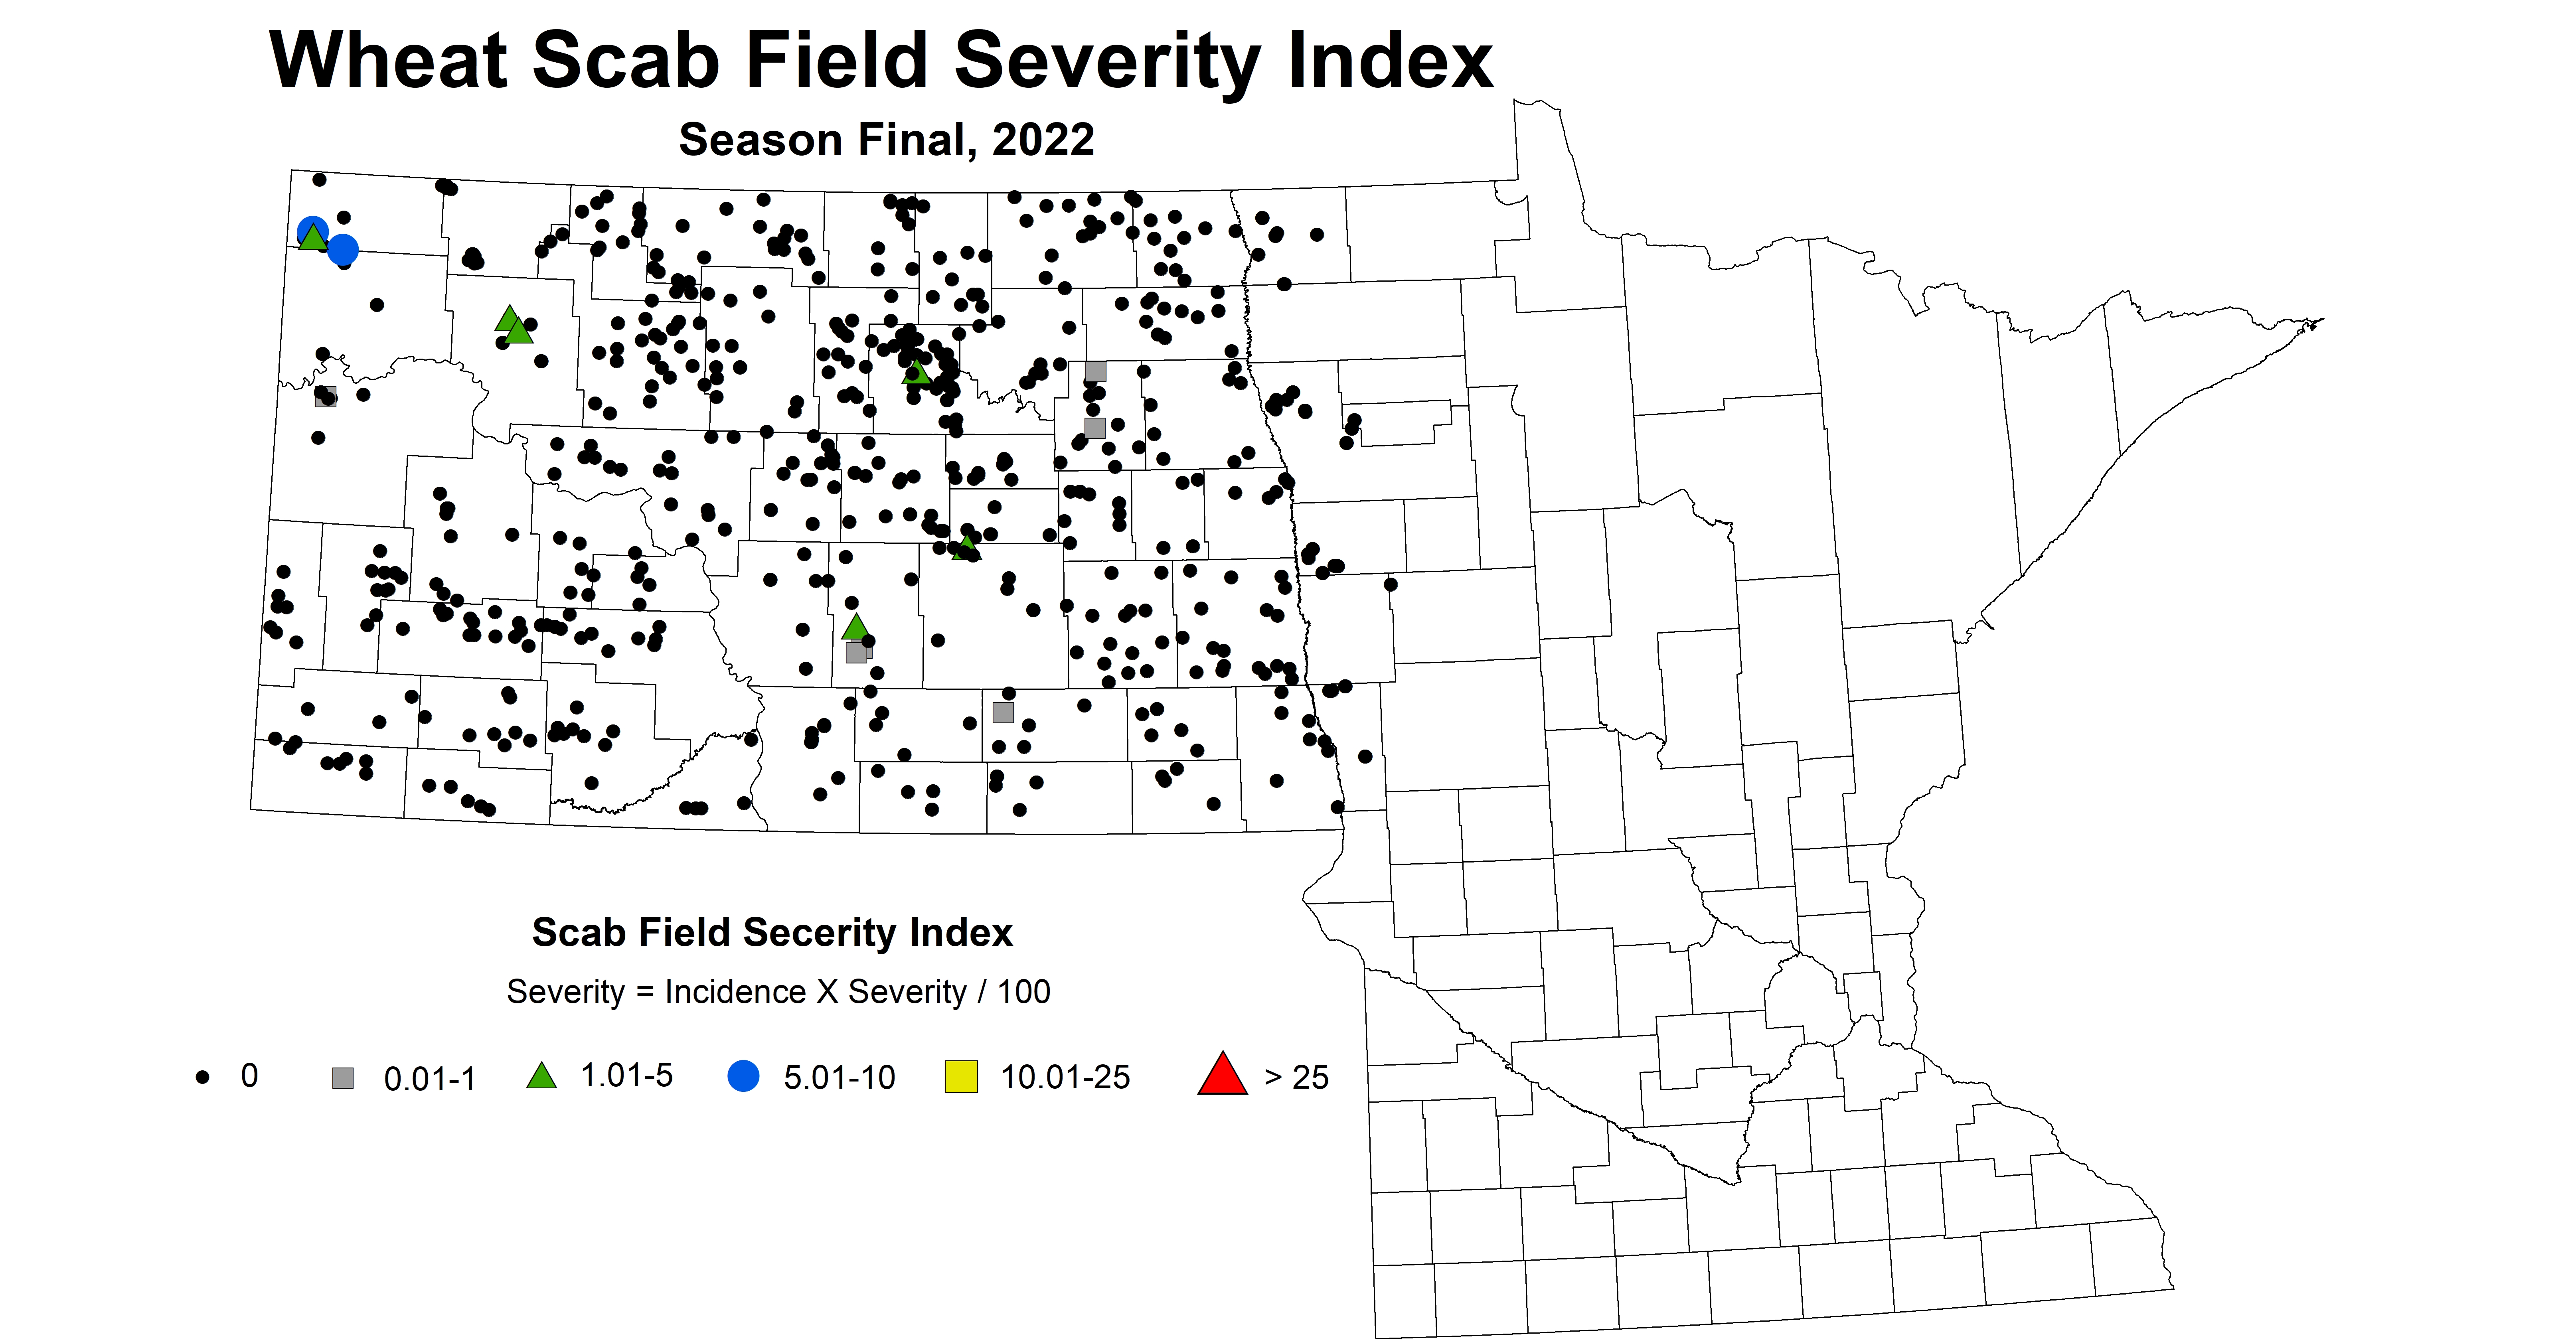 wheat scab field severity index 2022 season final